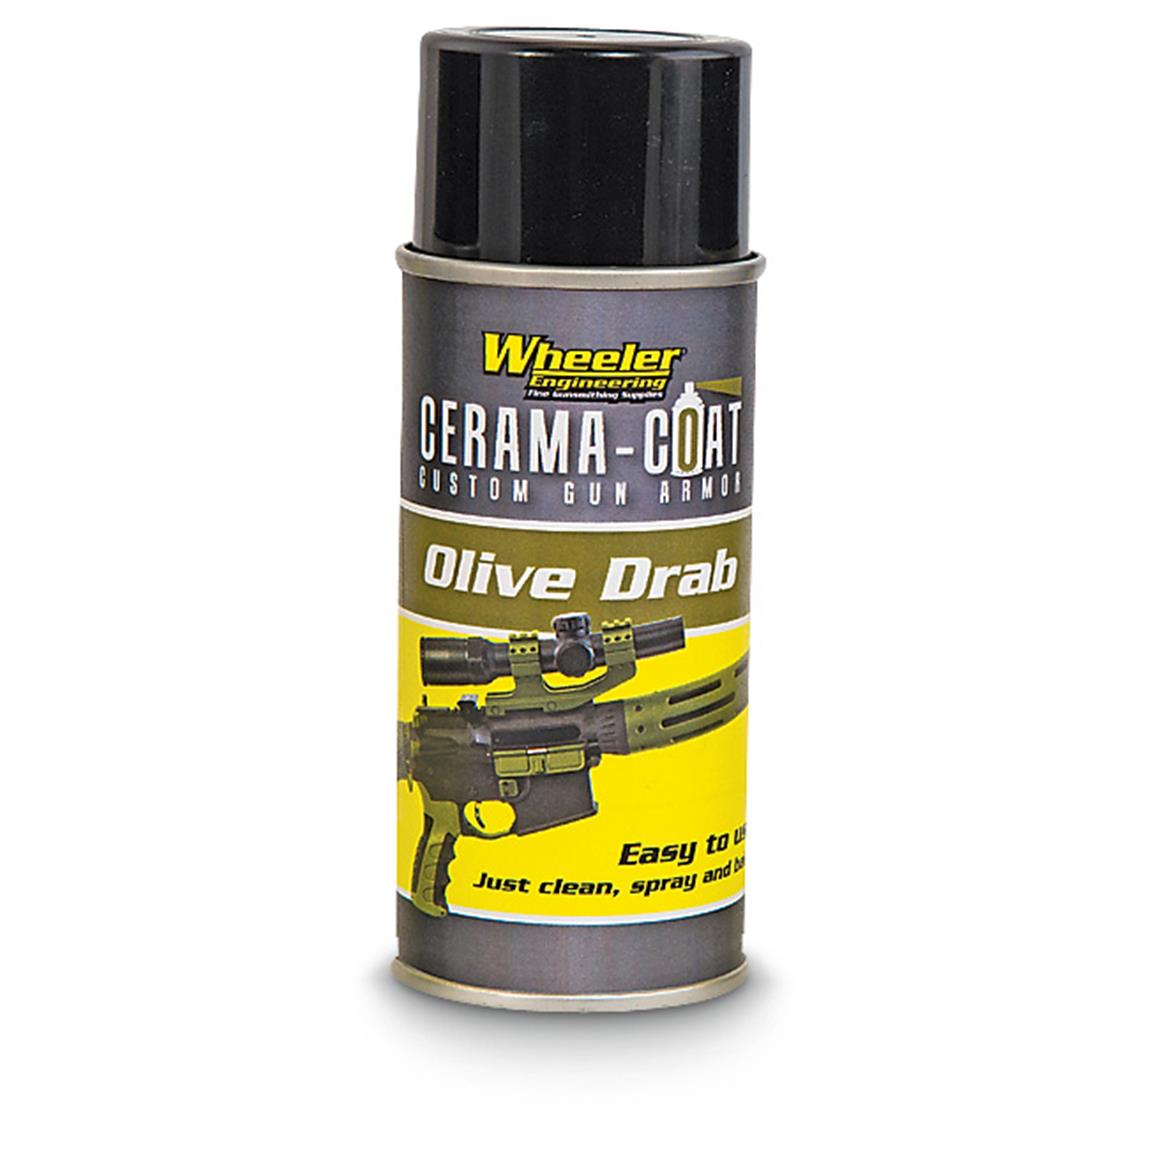 Wheeler Cerama-Coat Metal Spray Finish, Olive Drab